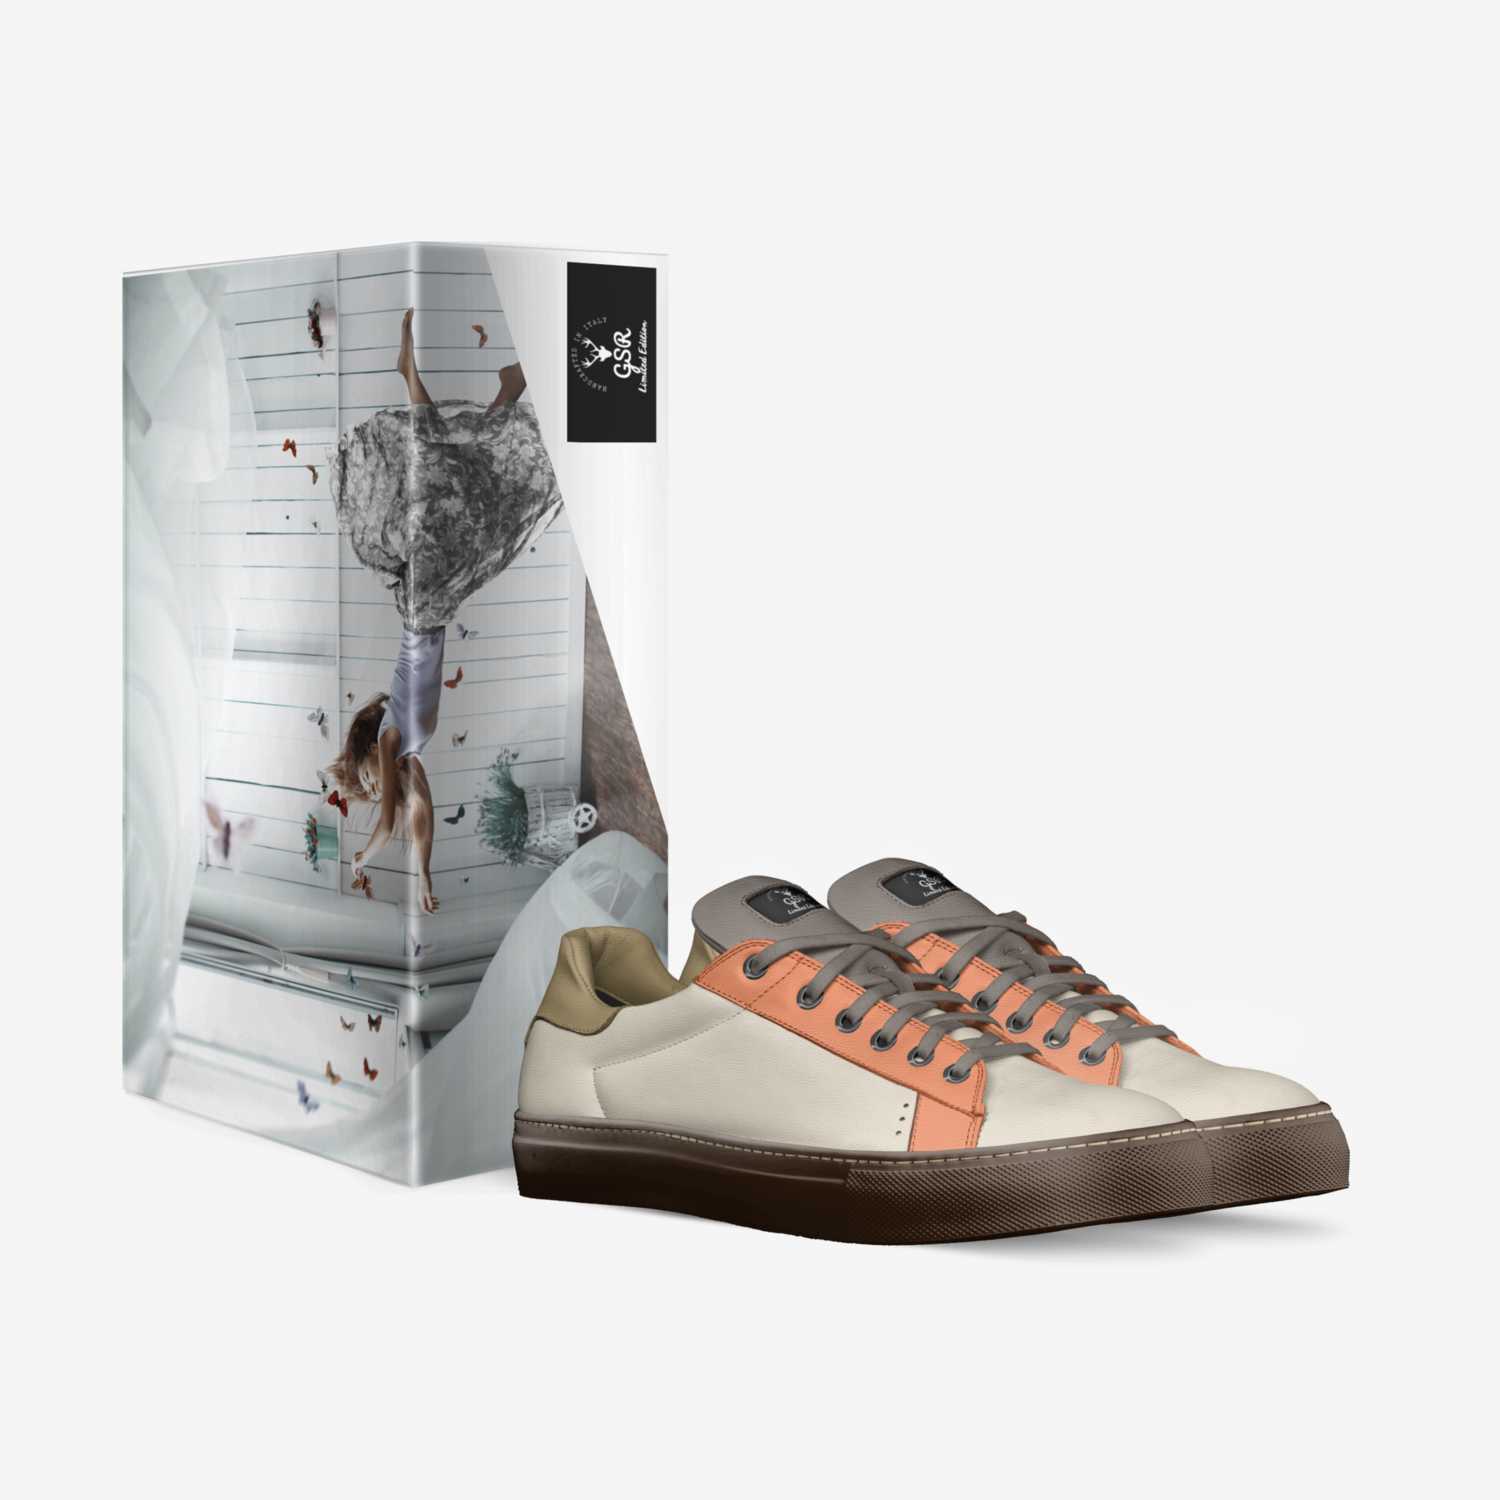 Galai custom made in Italy shoes by Glaize Ranara | Box view